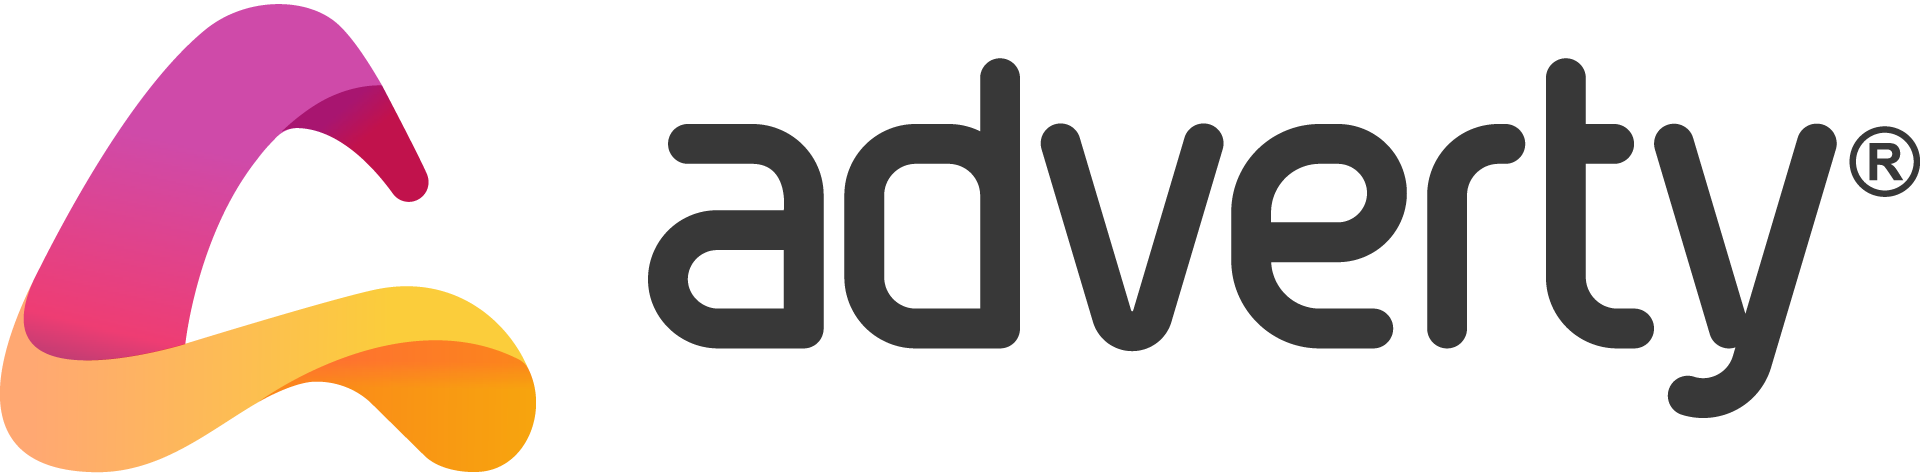 adverty.logo